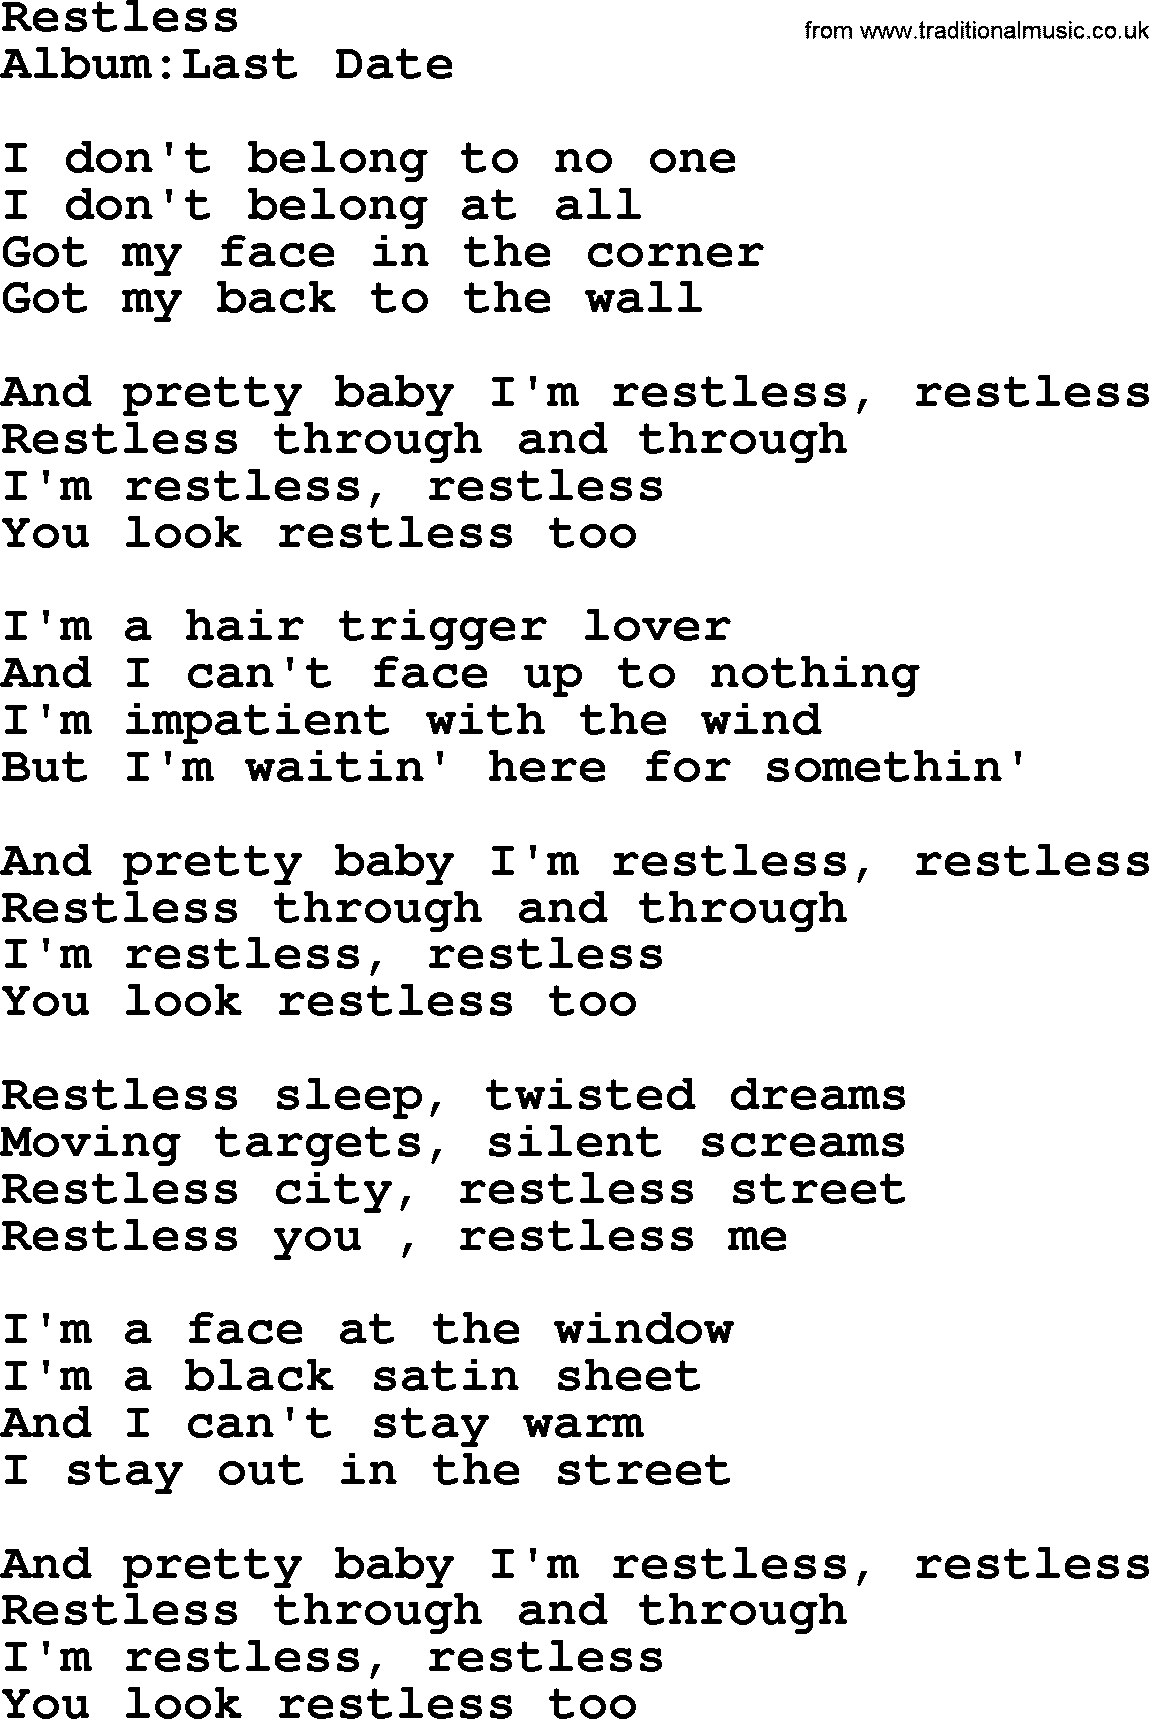 Emmylou Harris song: Restless lyrics